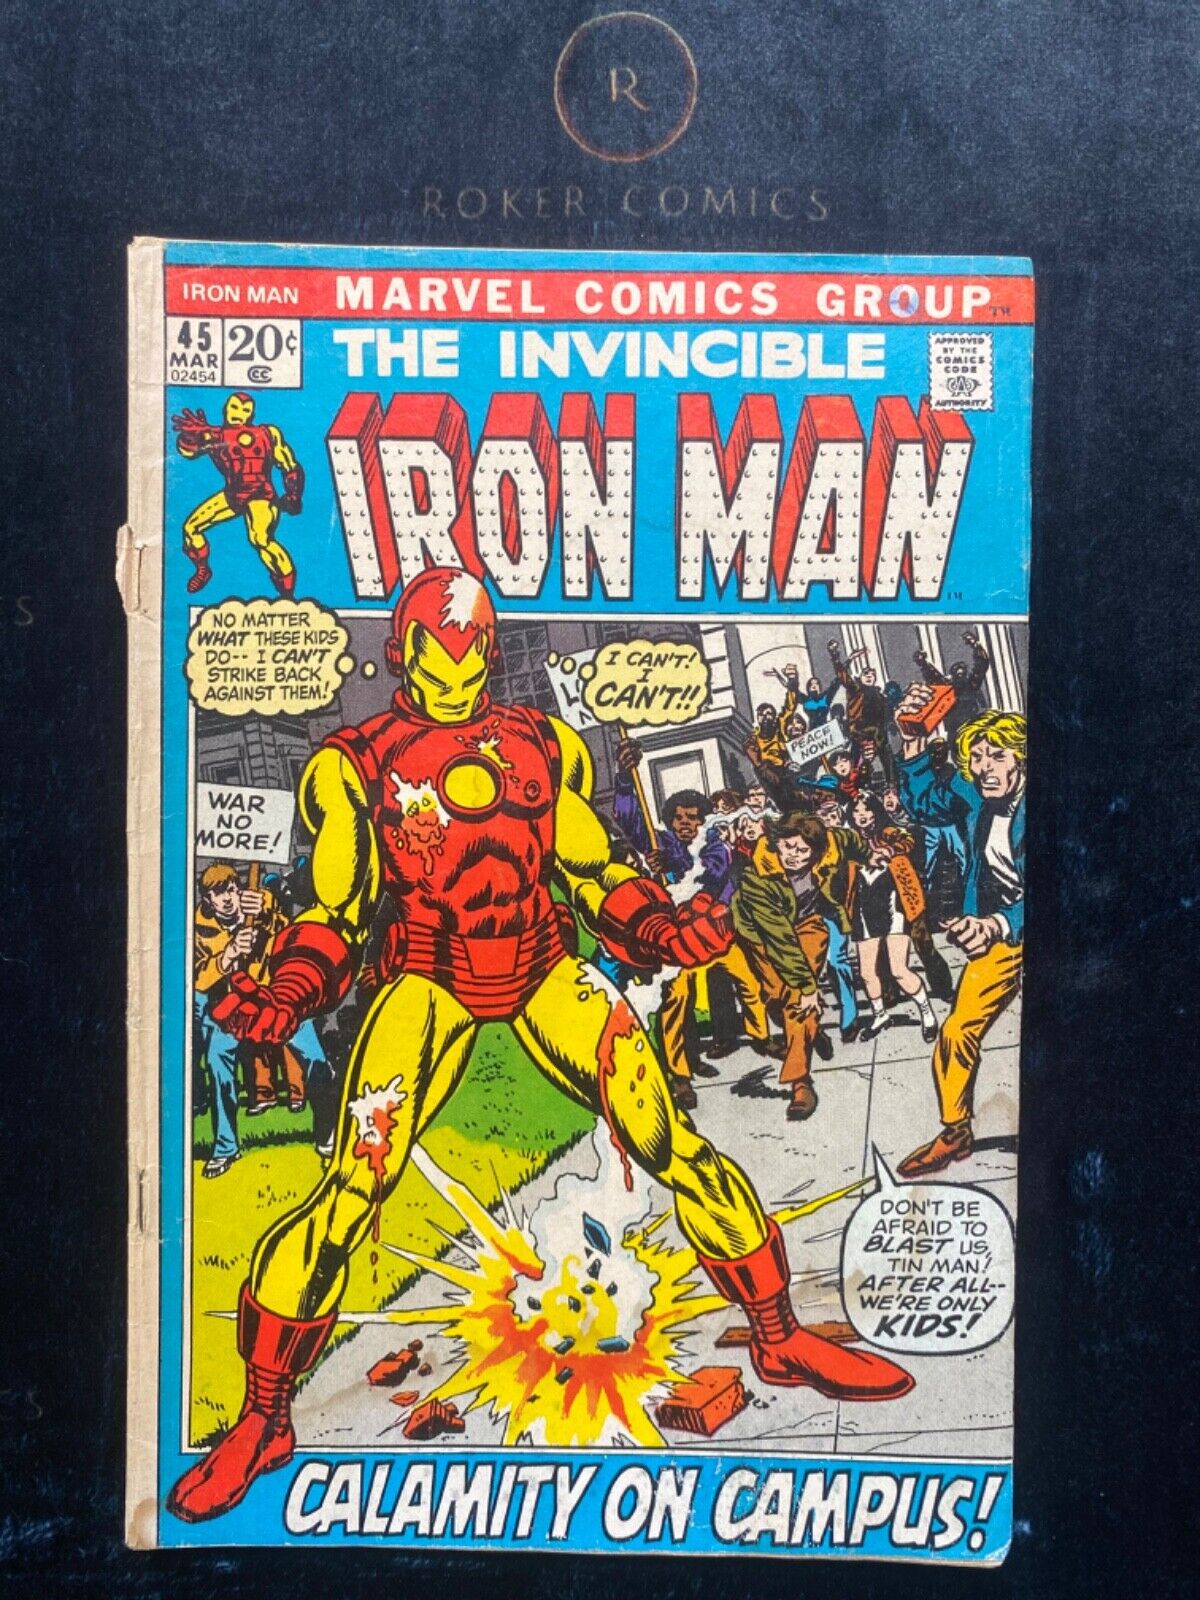 RARE 1972 Iron Man #45